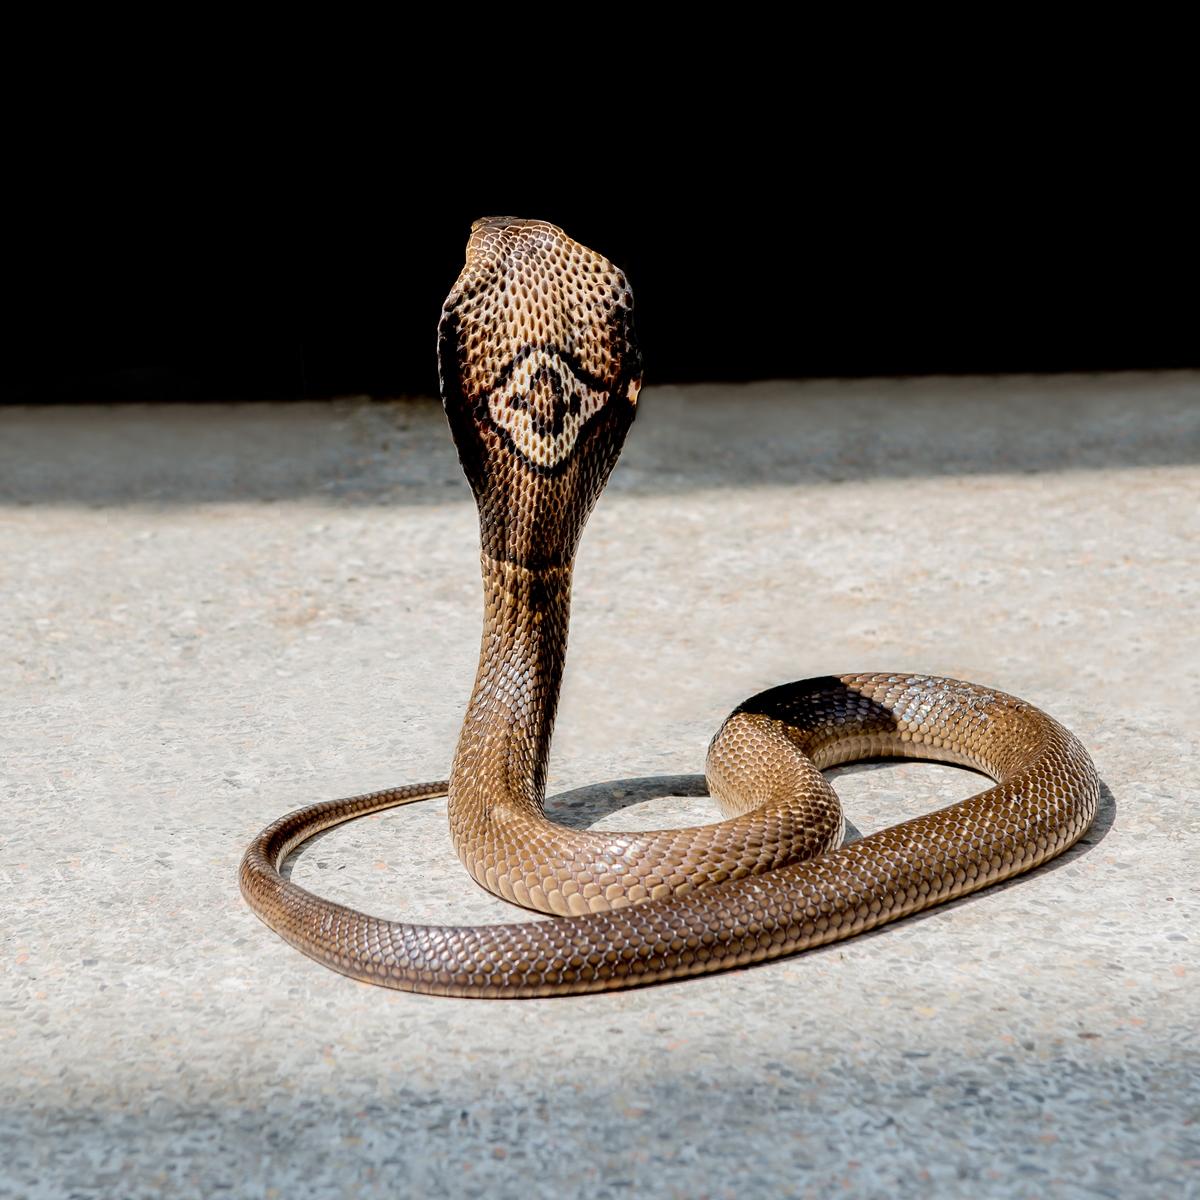 Naja kaouthia (a.k.a monocled cobra). Image from Khao Sok.